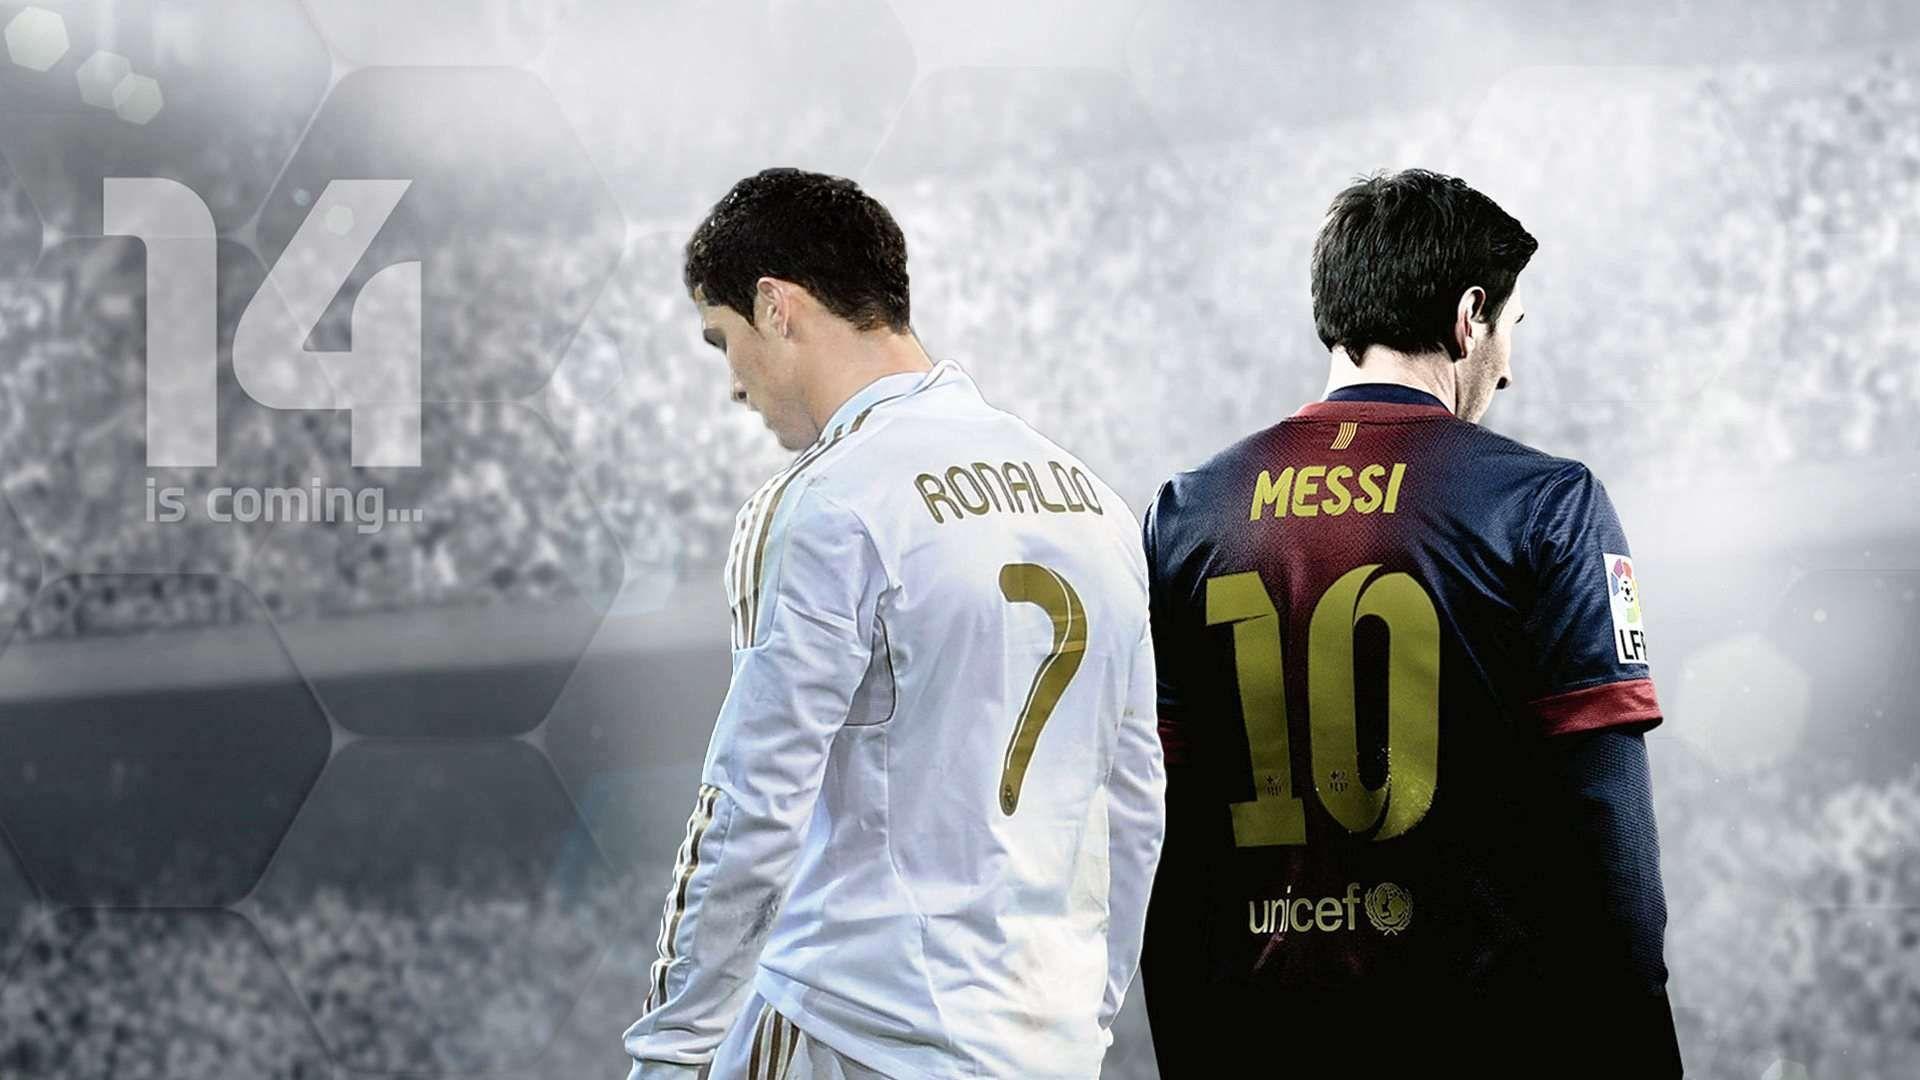 Ronaldo Vs Messi Wallpaper High Definition #StP. Awesomeness. FIFA